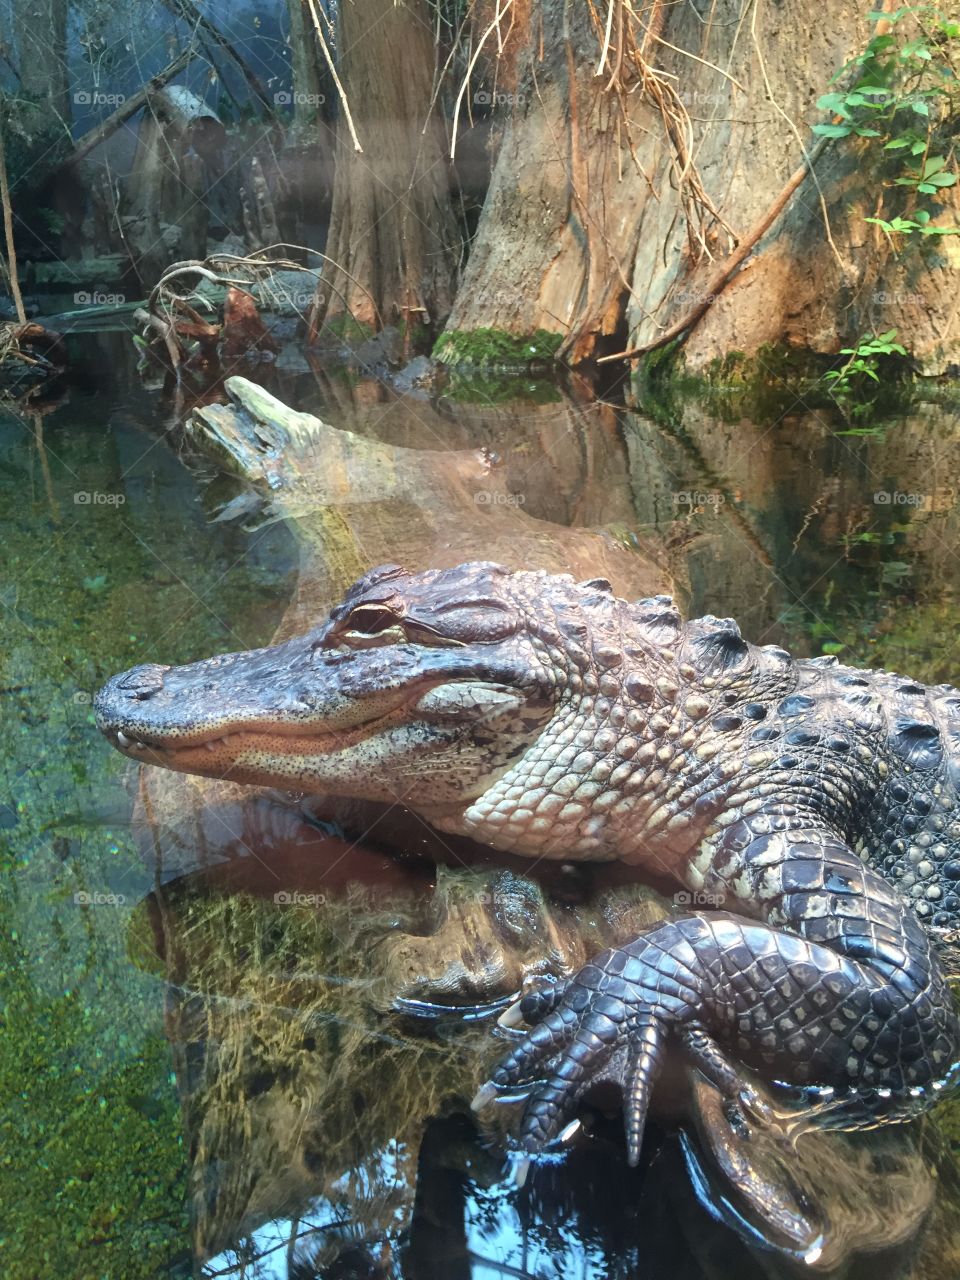 Crocodile on a log